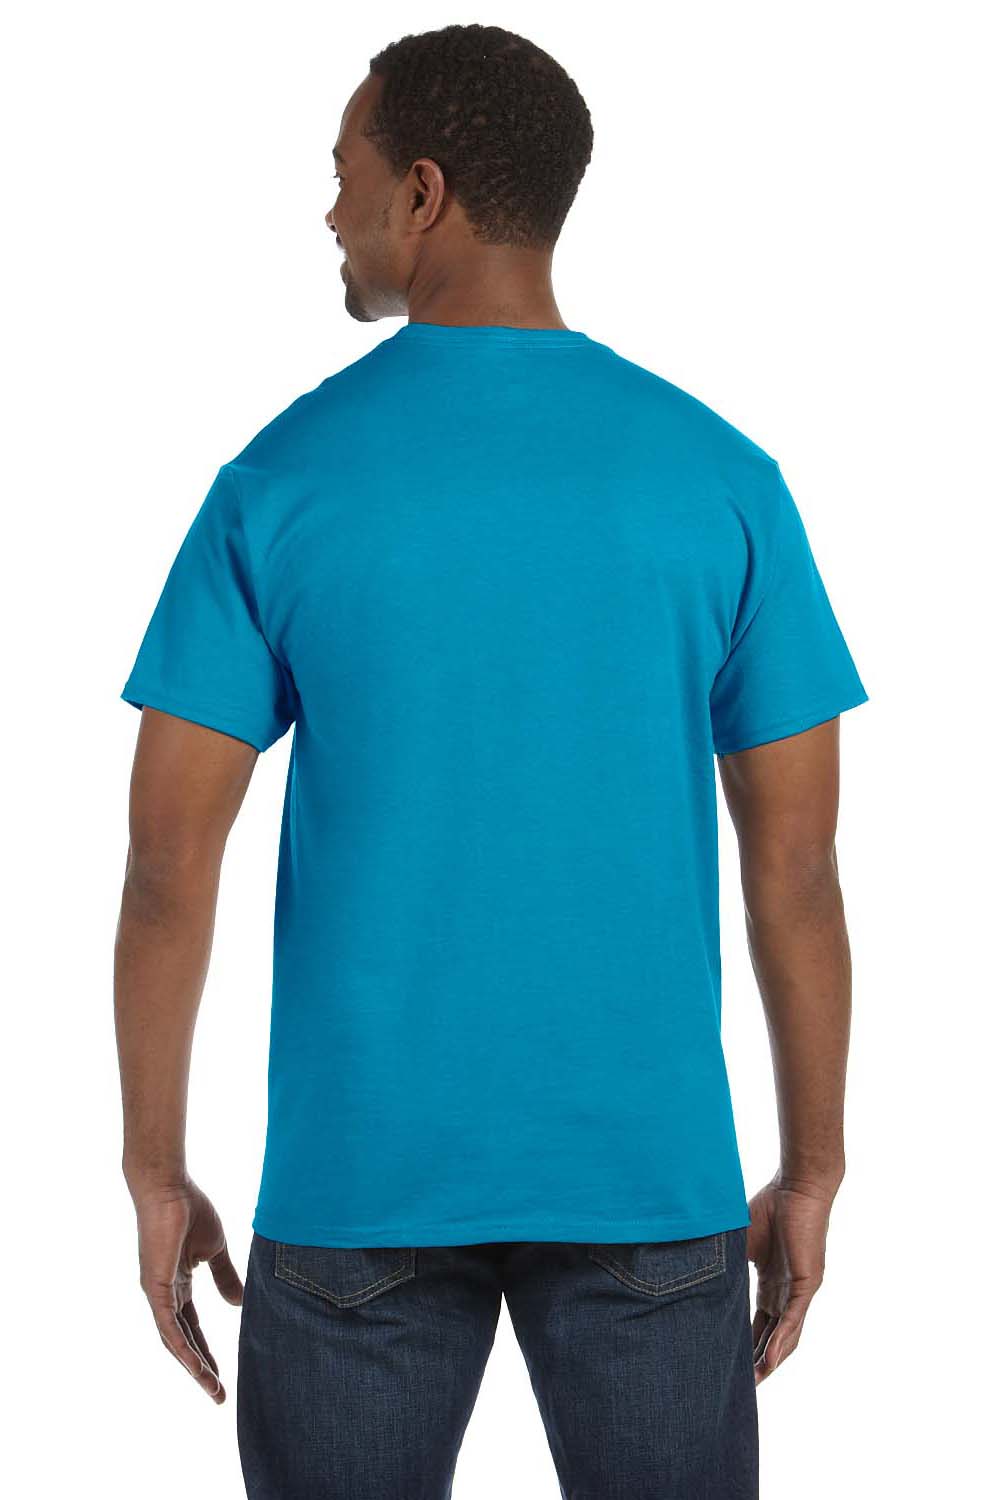 Hanes 5250T Mens ComfortSoft Short Sleeve Crewneck T-Shirt Teal Blue Back